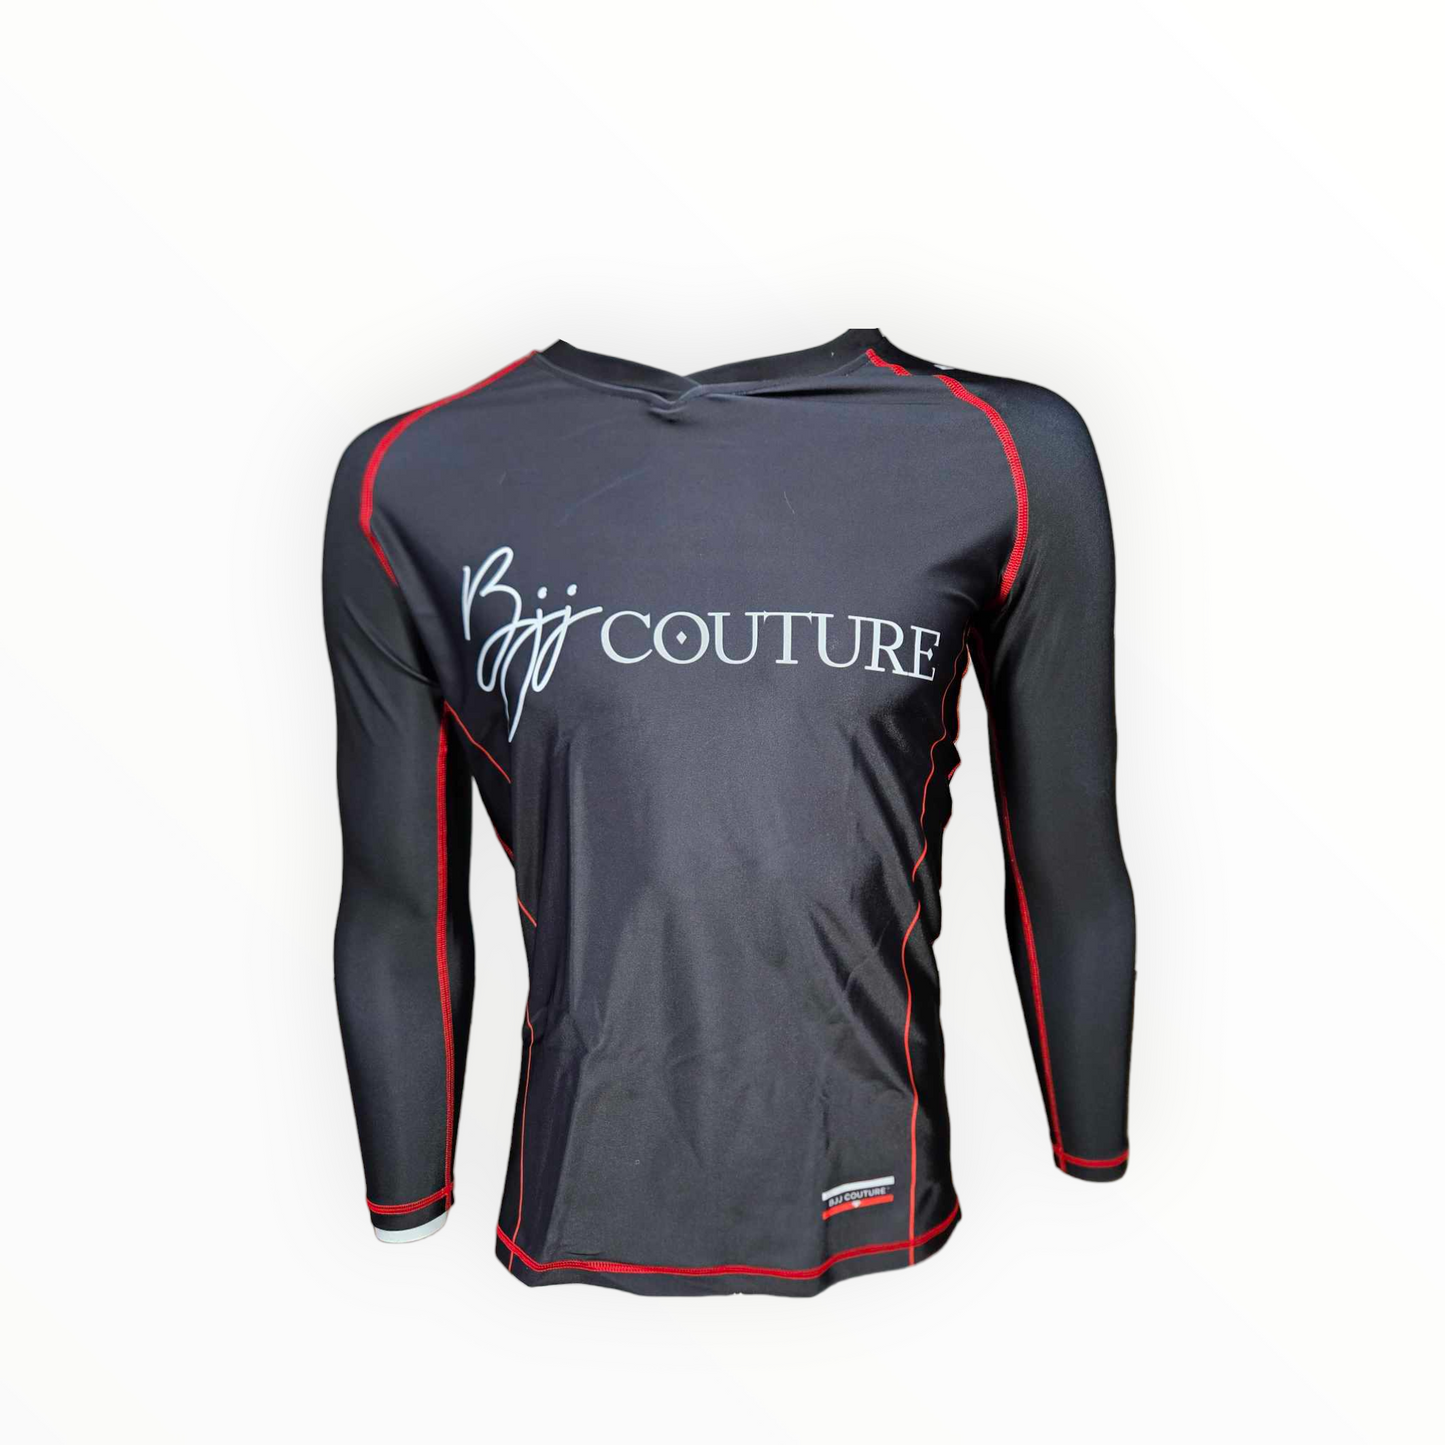 BJJ Couture Essentials Black Rashguard with Red Stitching